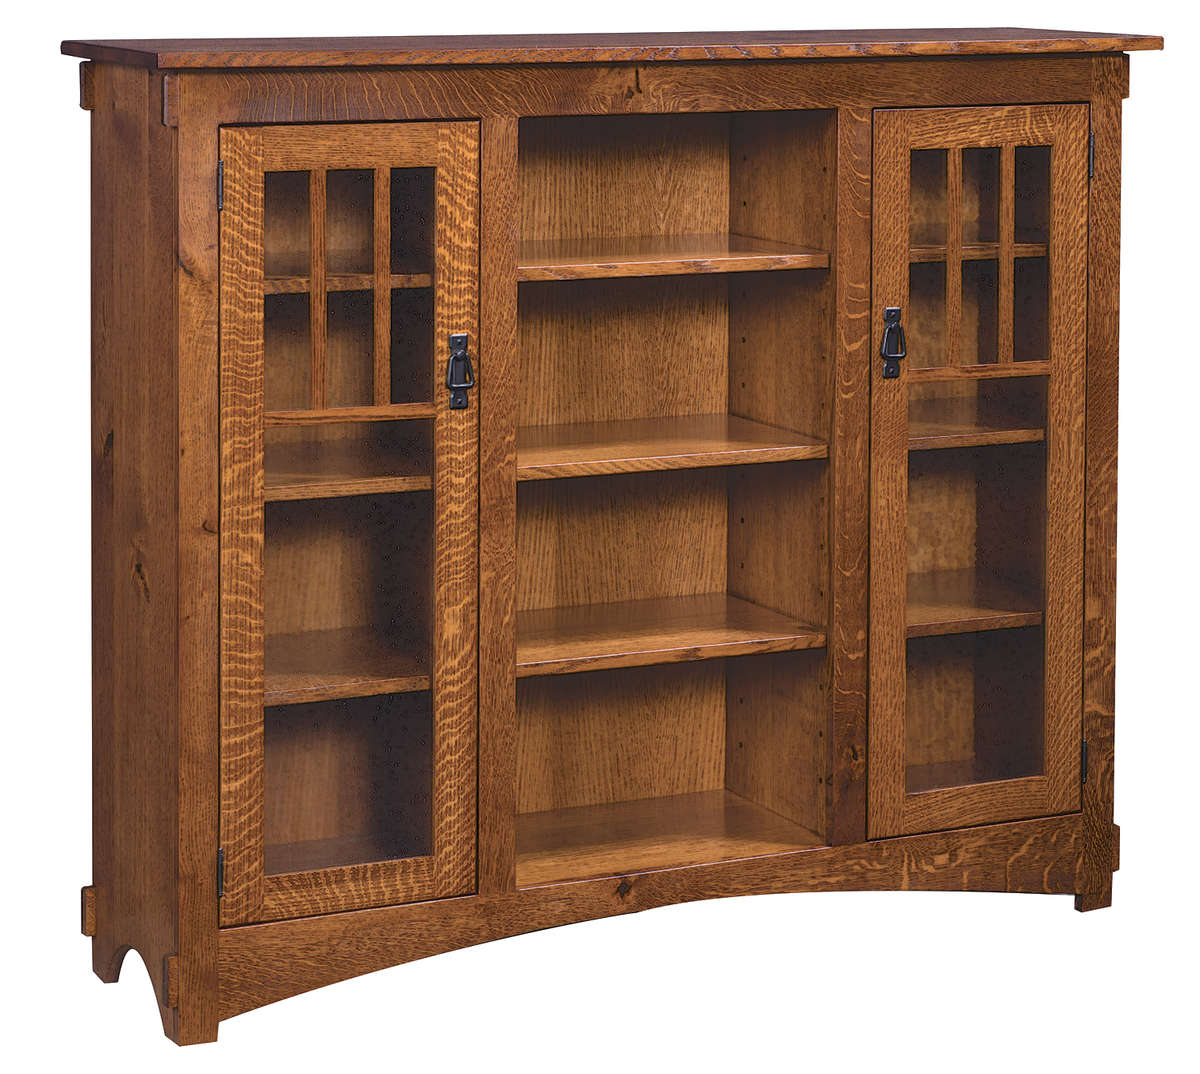 1205- 1107 Craftsman Mission Bookcase